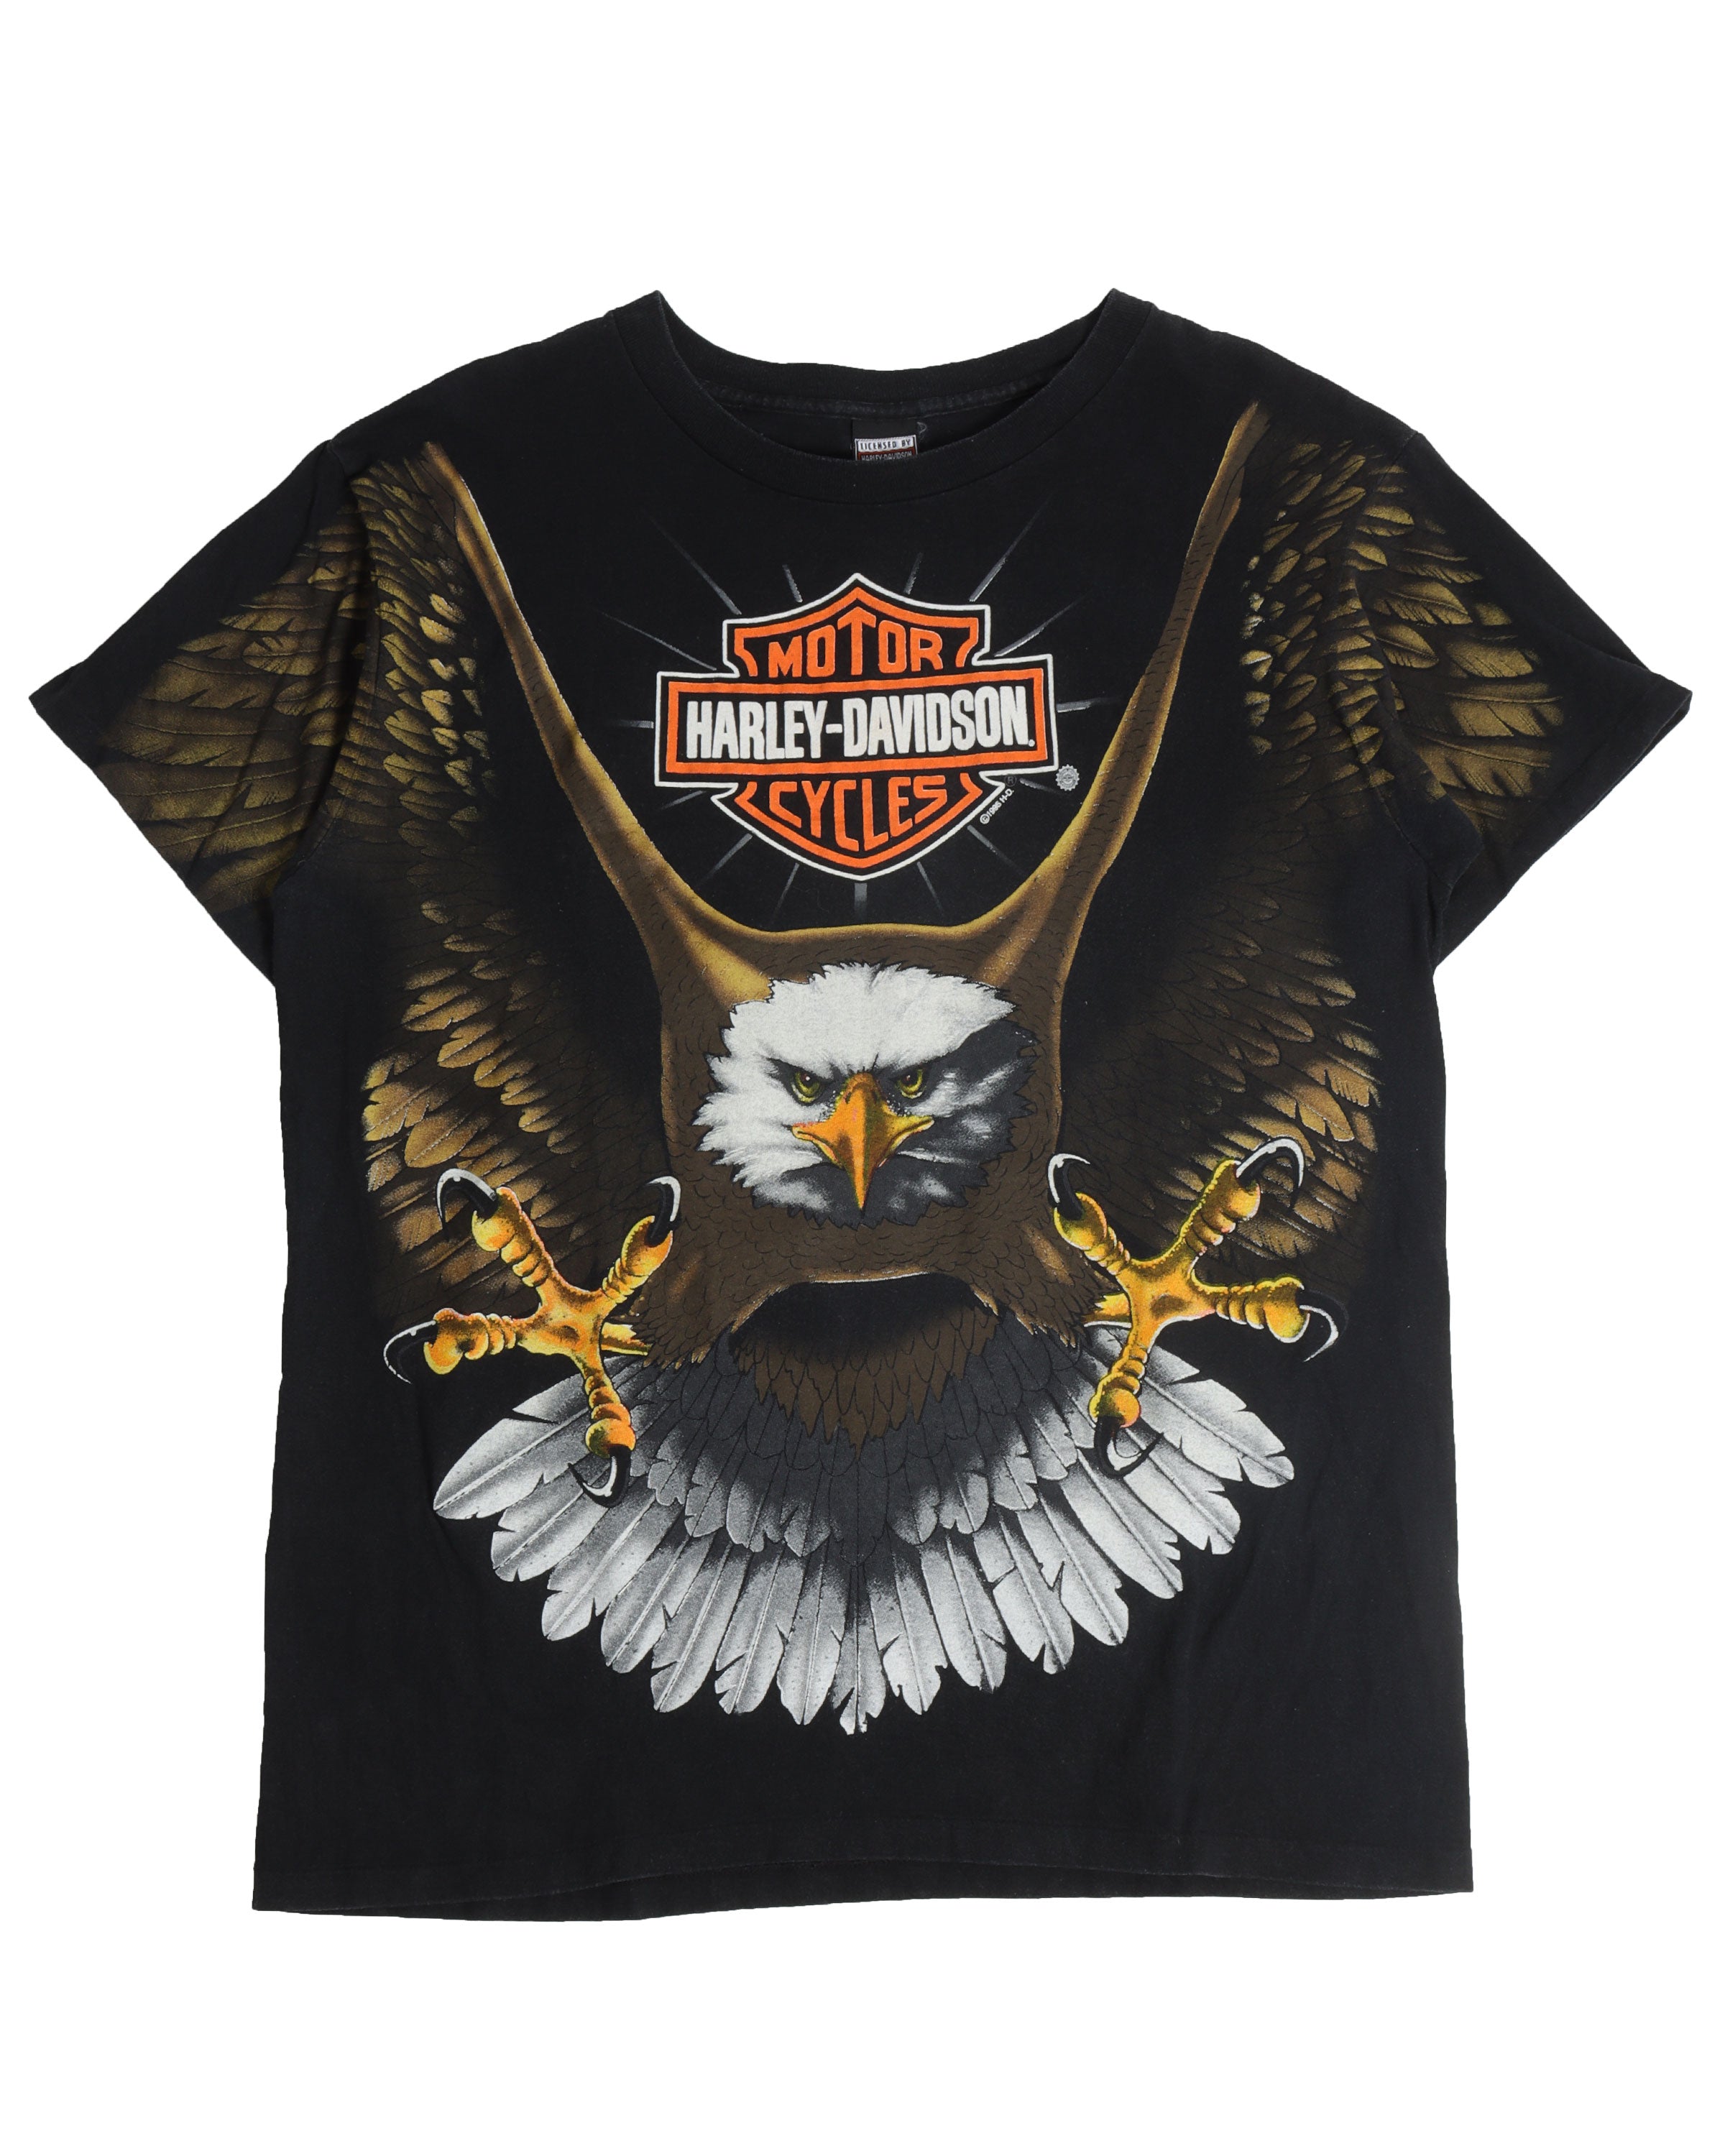 Harley Davidson Las Vegas Spread Eagle T-Shirt